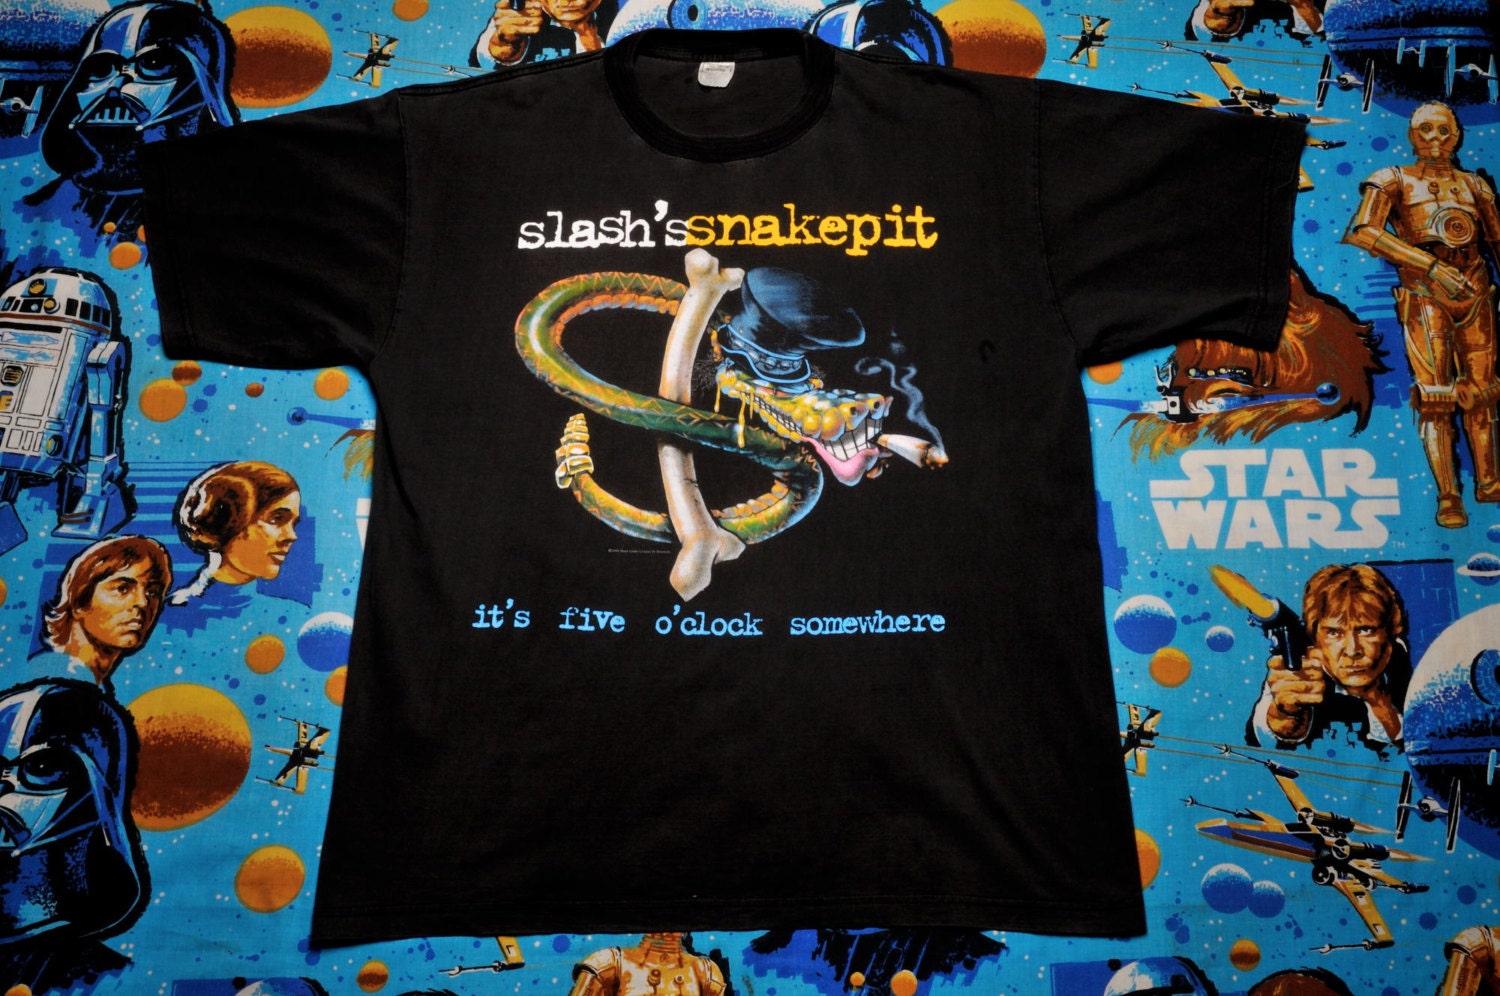 Slash's Snakepit Tour T-Shirt XL1500 x 996